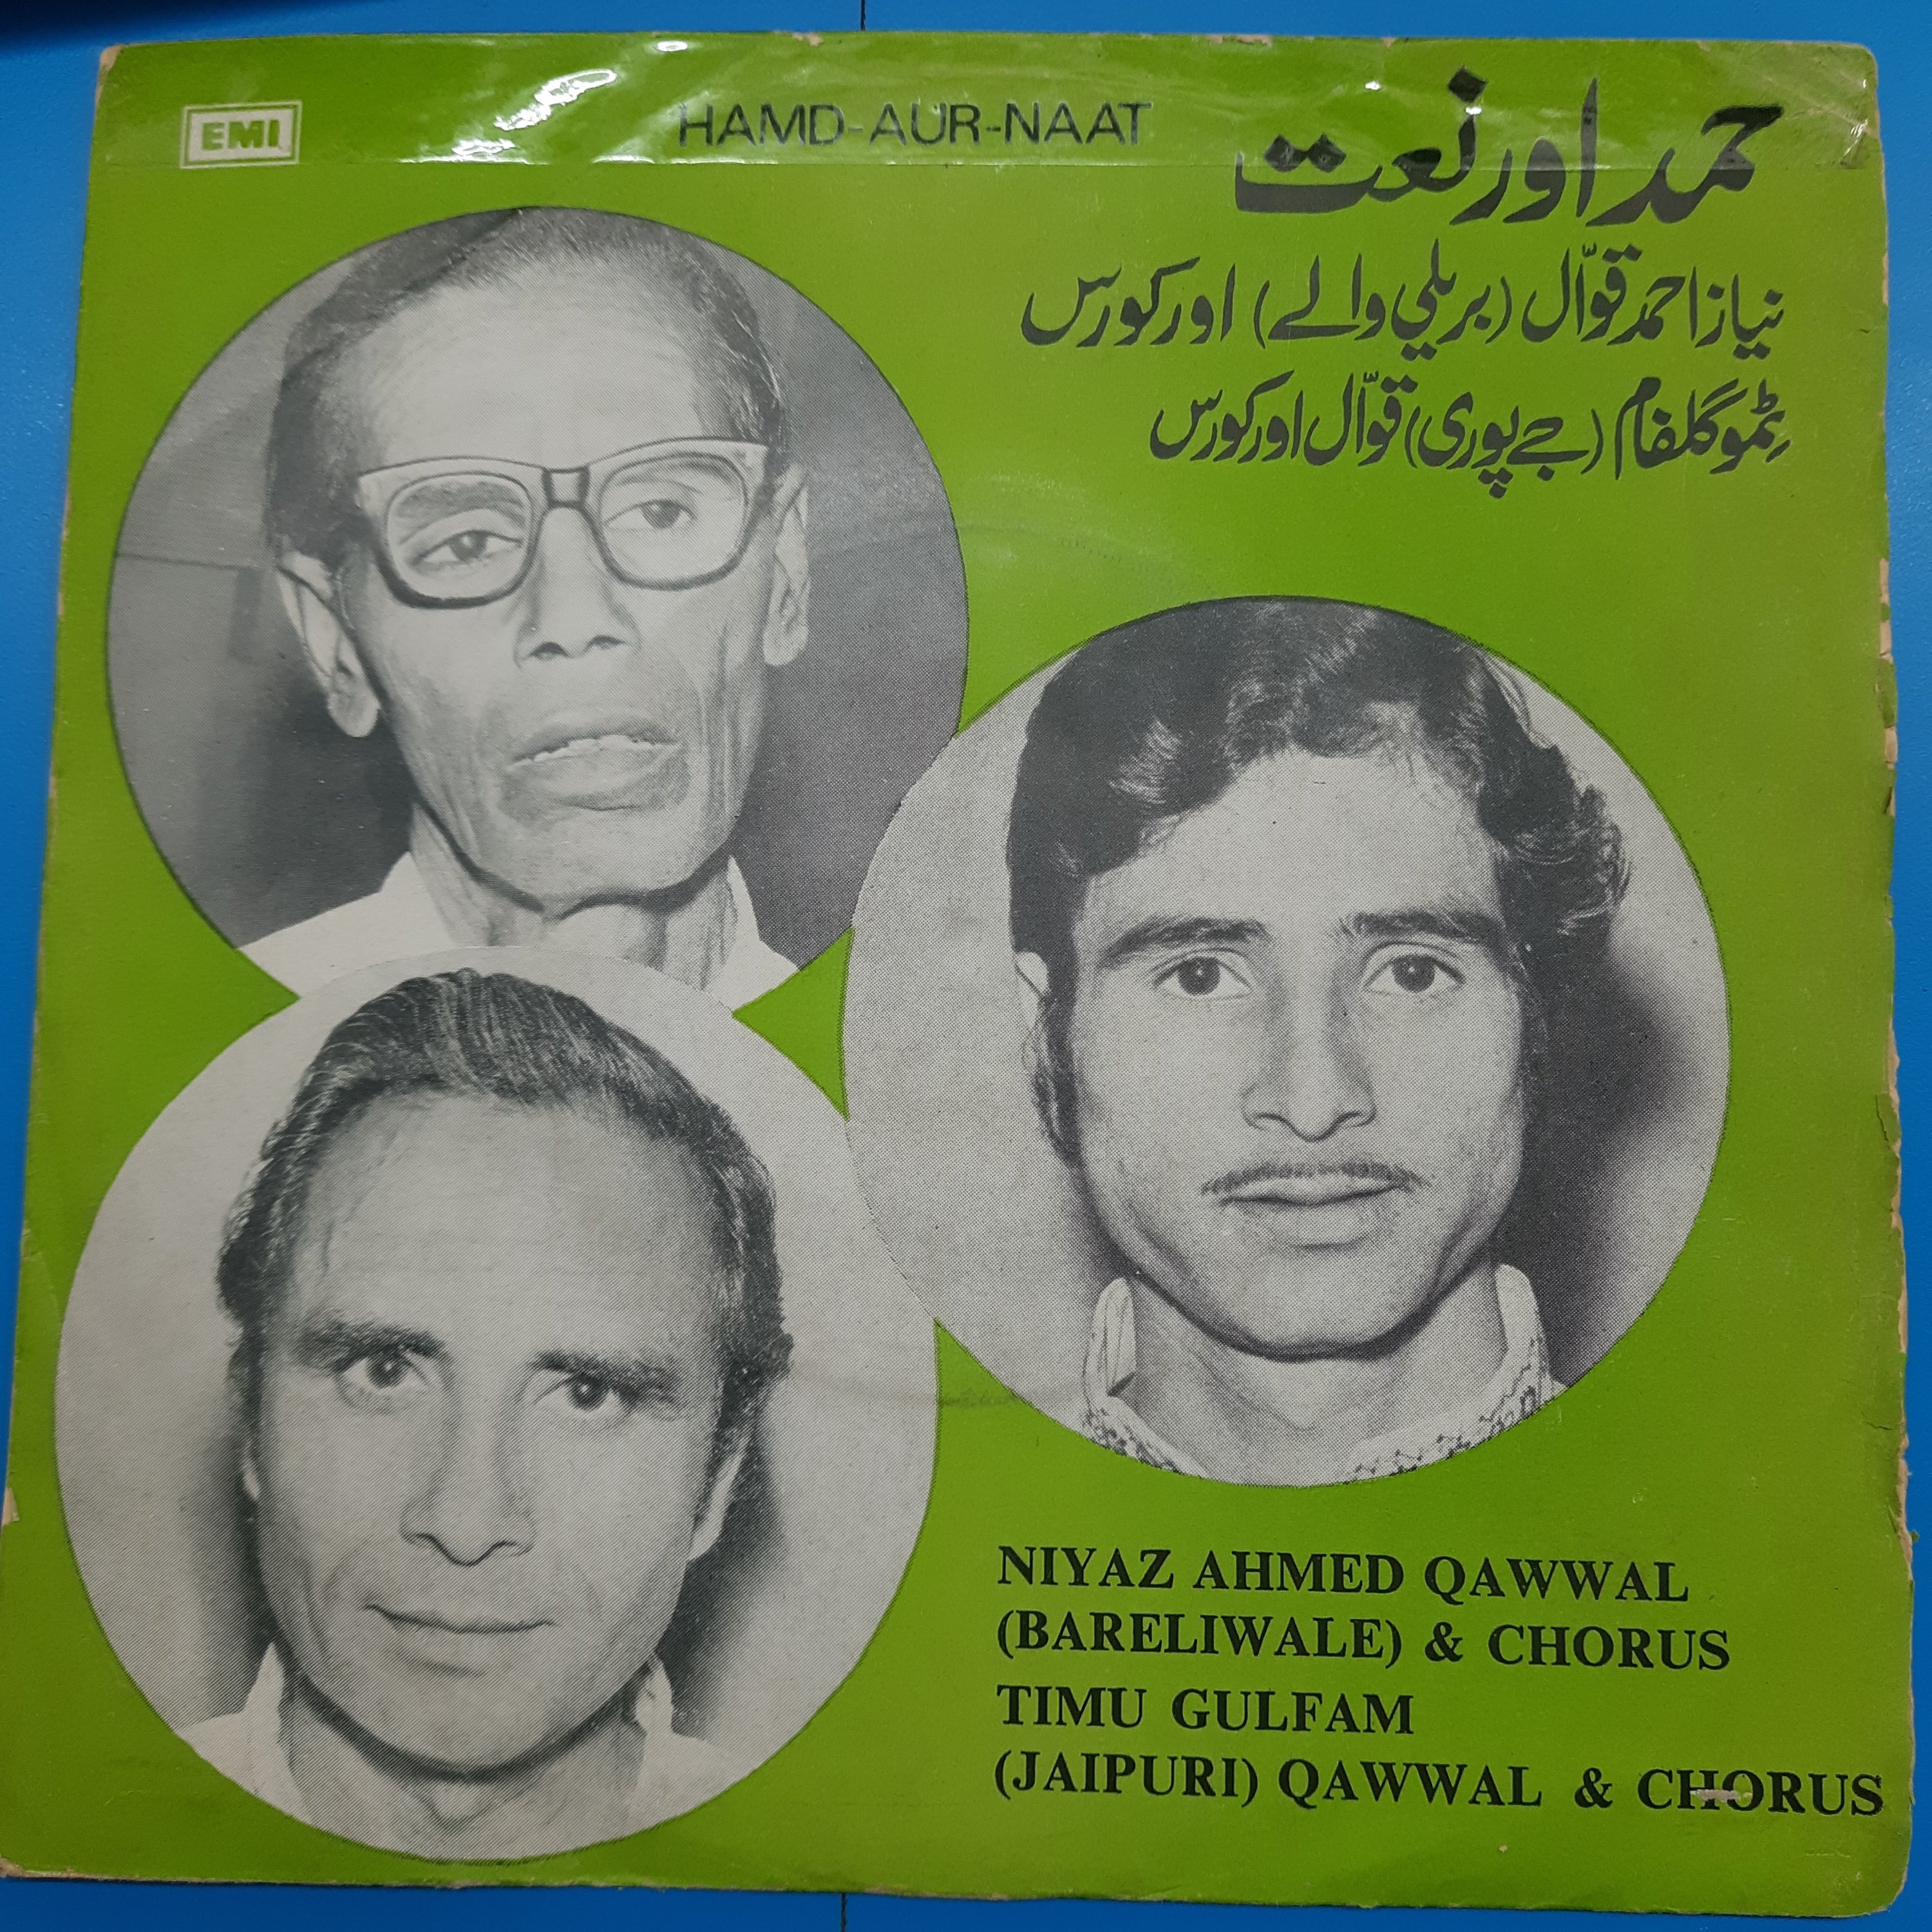 Niyaz Ahmed  - Hamd-Aur-Naat (45-RPM)